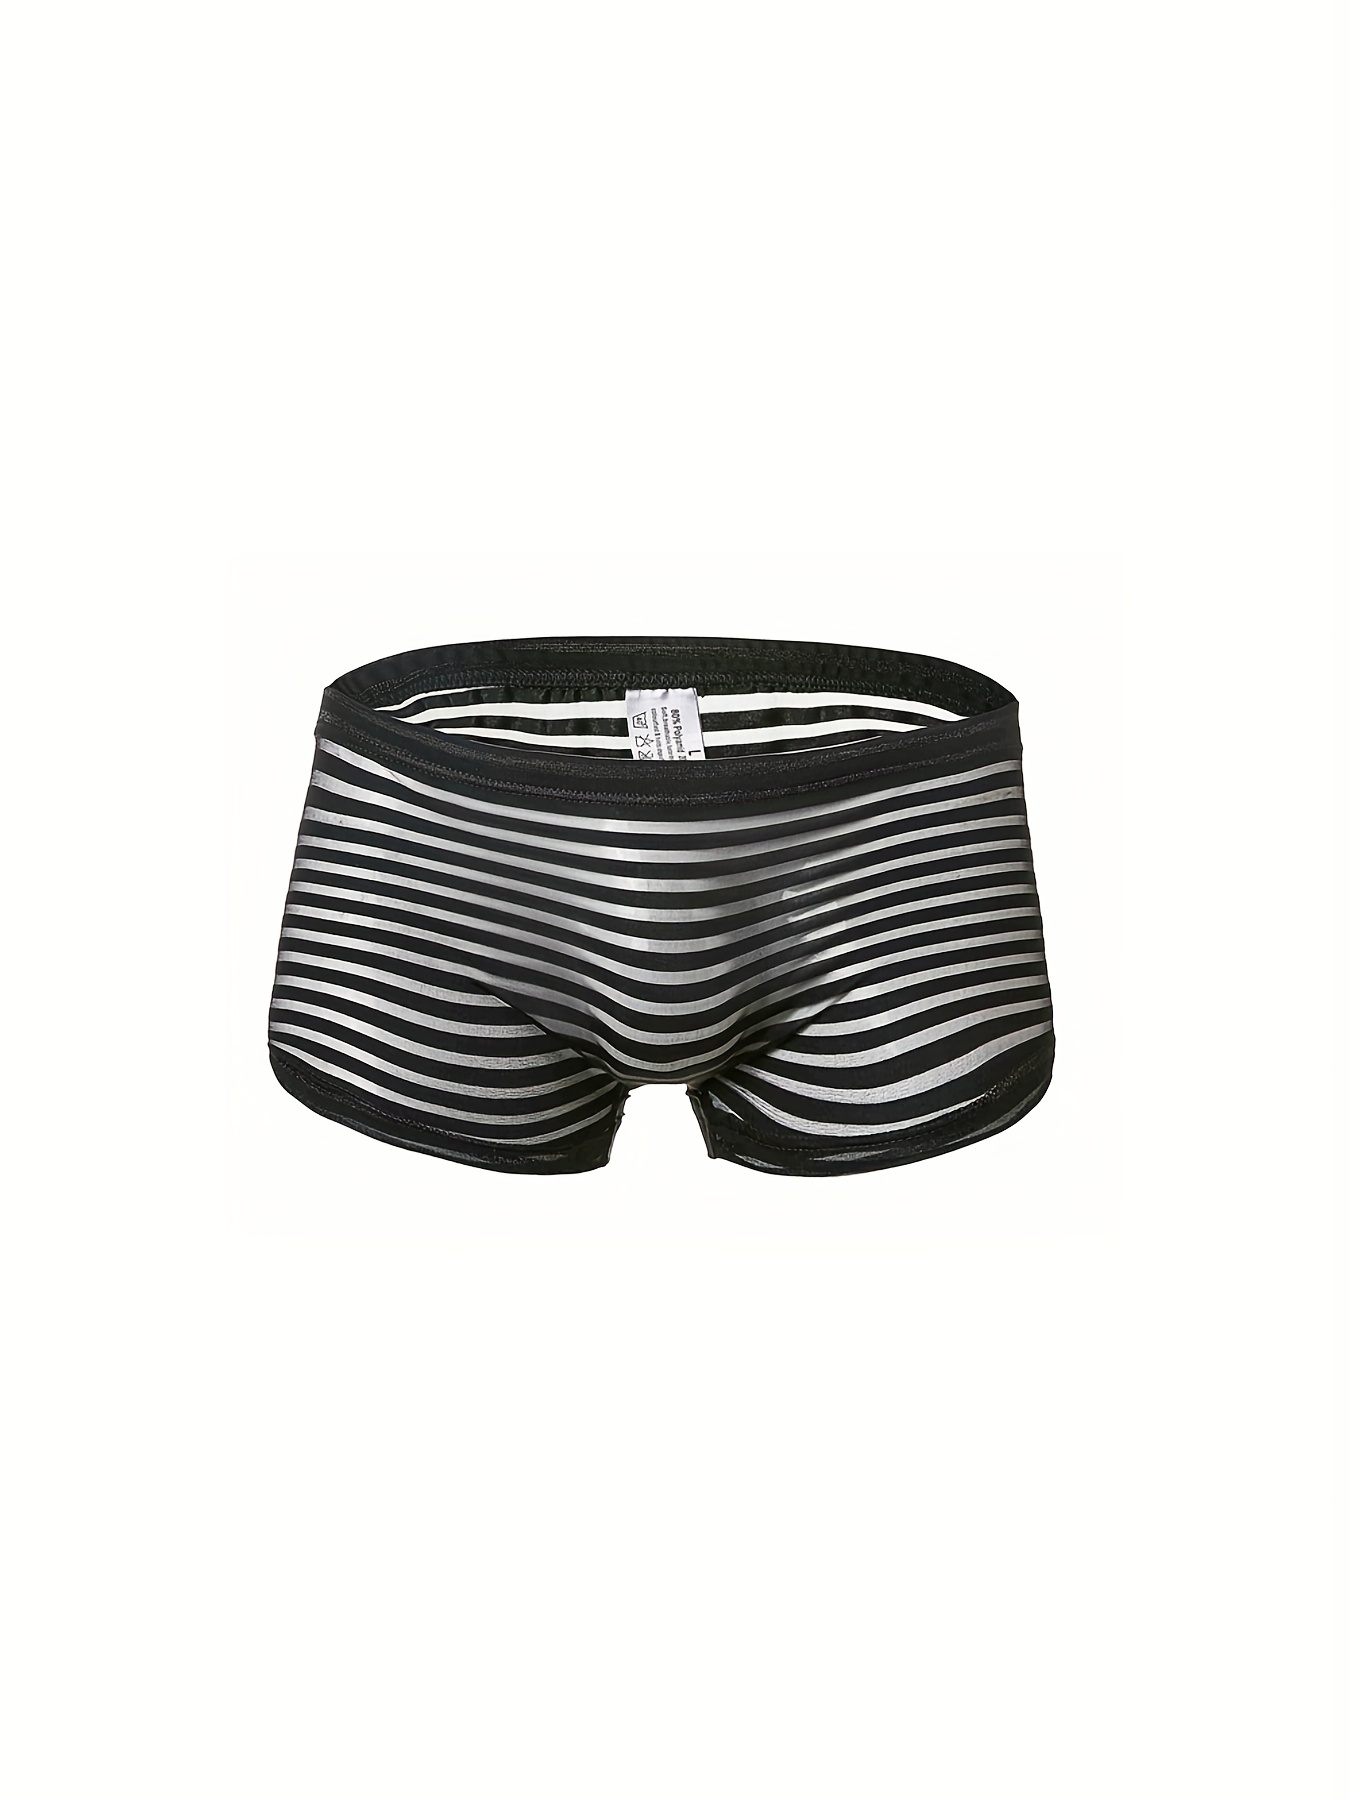 Men's Fashion Striped Mesh See Through Black Underwear Boxers, Transparent  Boxer Shorts Boxers Underpants Underwear Briefs